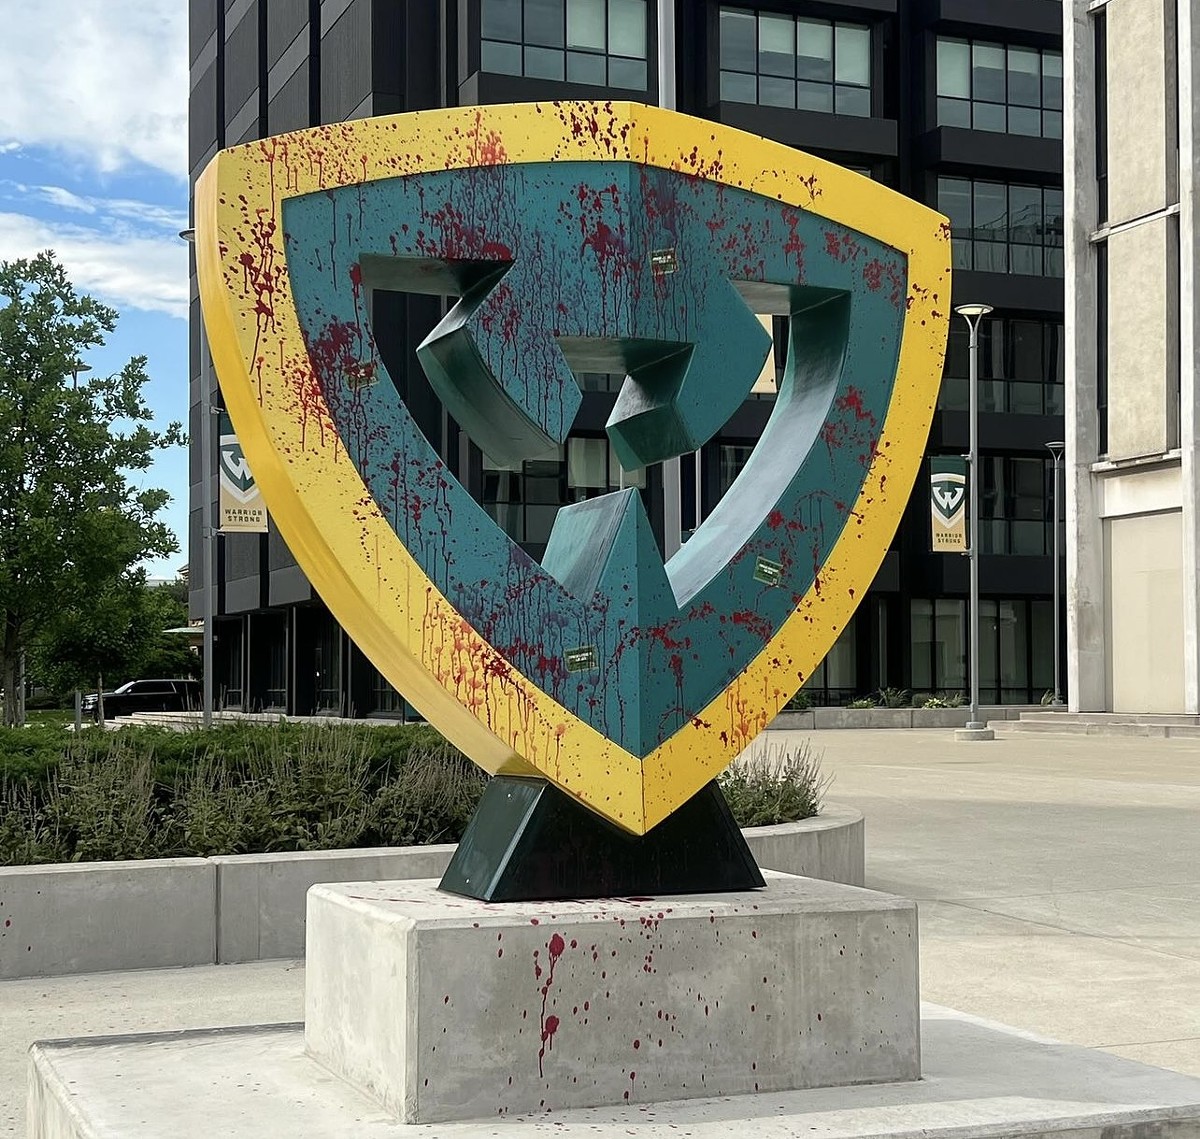 Wayne State University’s “W” sign was vandalized Wednesday.